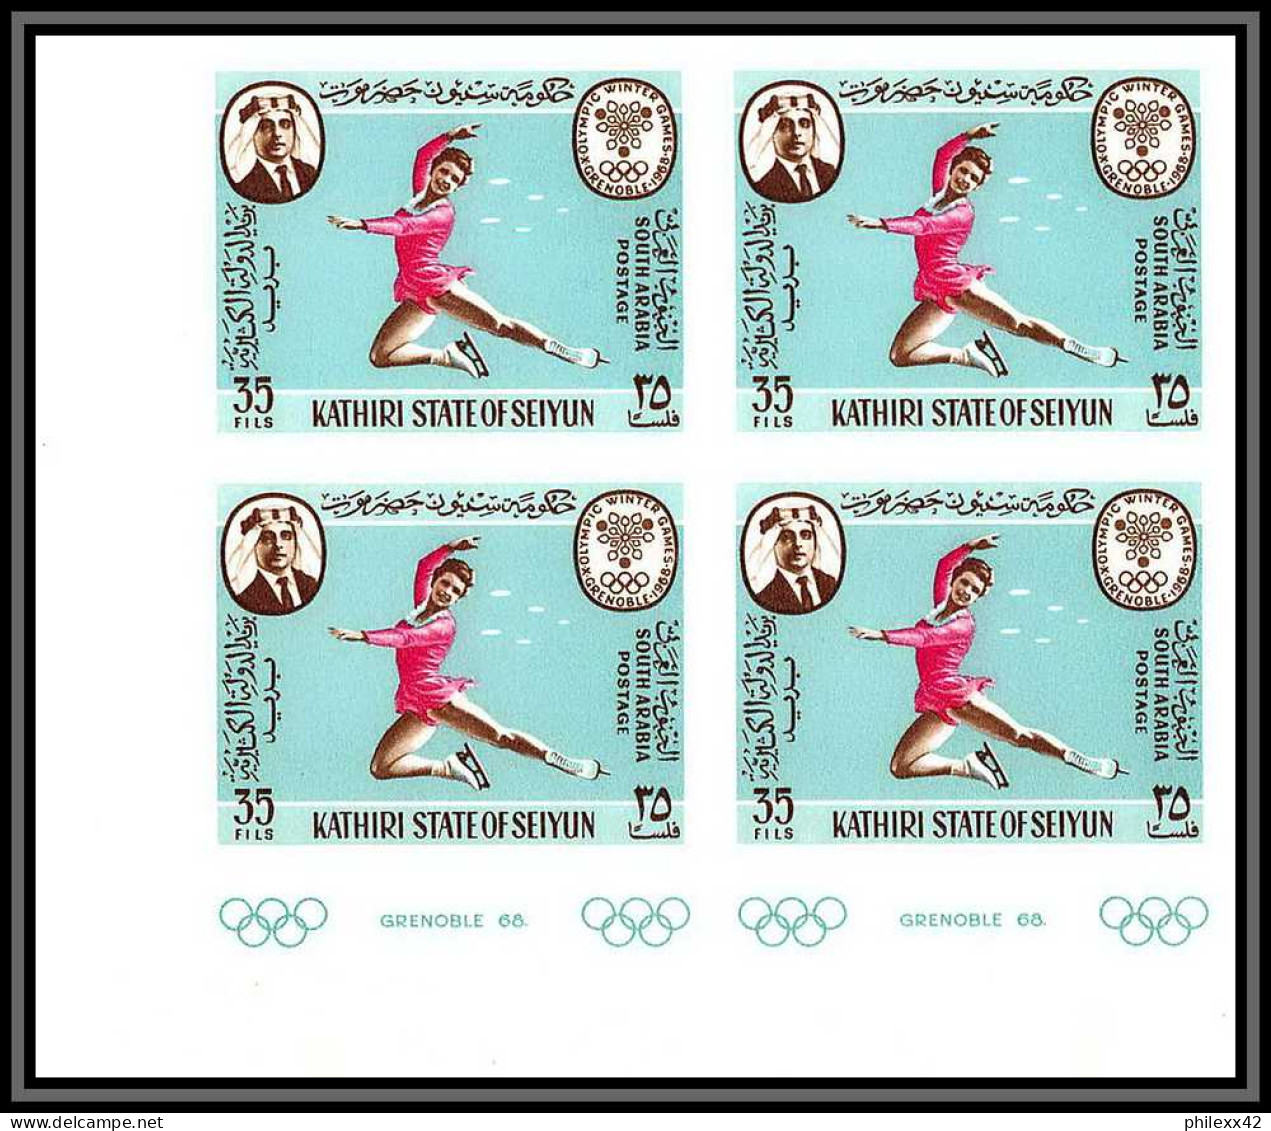 Aden - 1060c Kathiri state of seiyun N°134/140 B grenoble 1968 Non dentelé imperf jeux olympiques olympic games ** MNH 